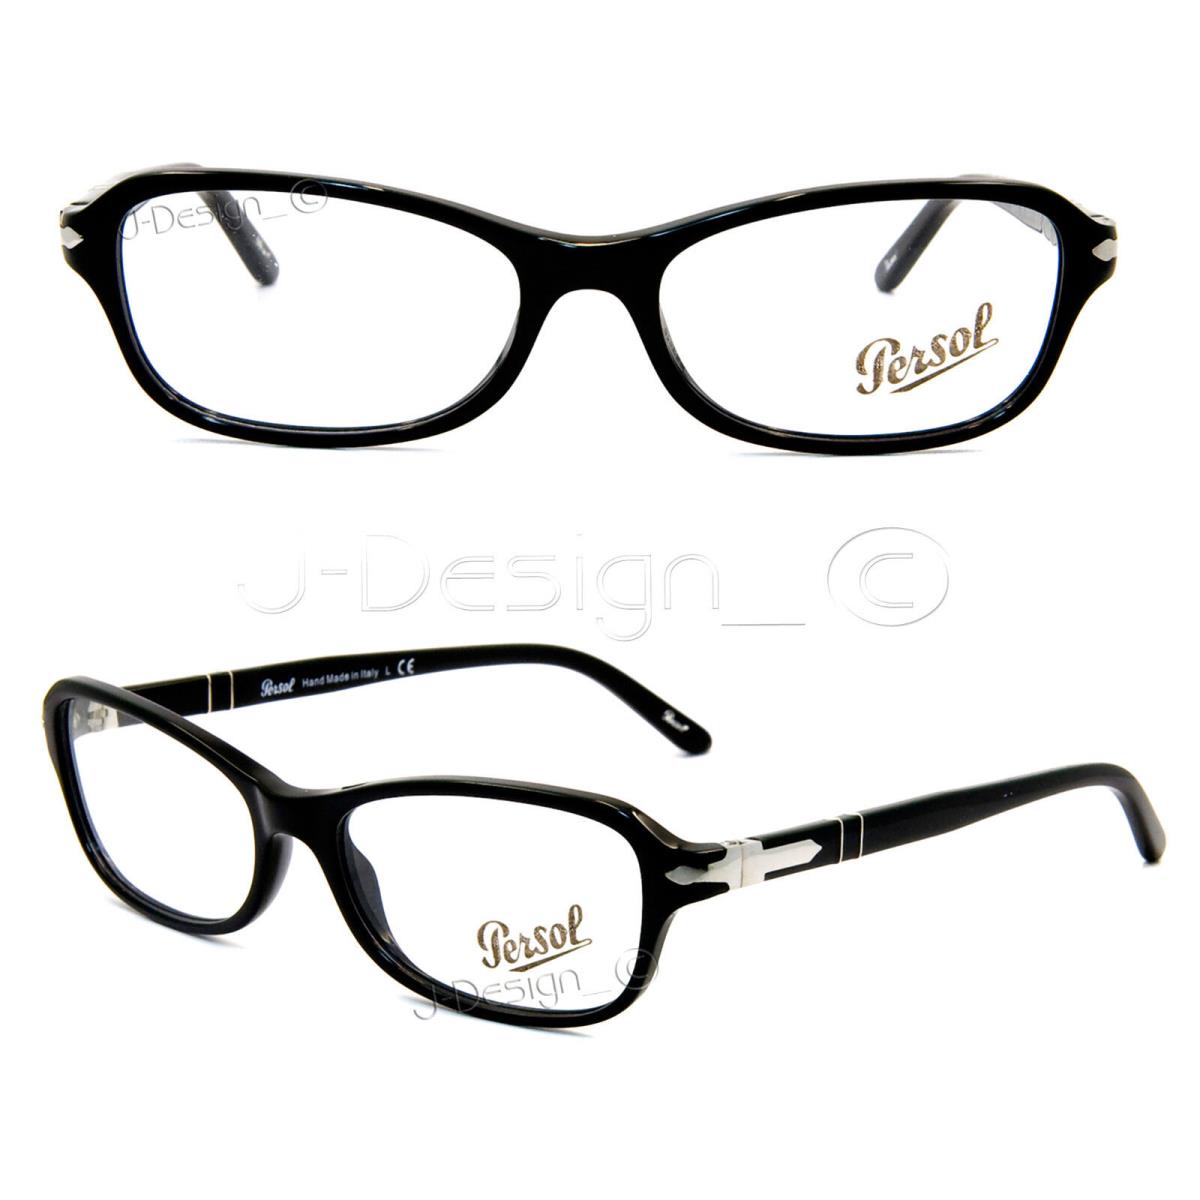 Persol 3006-V 95 Eyeglasses Rx 53/16/140 Made in Italy - Black Frame, Clear Lens